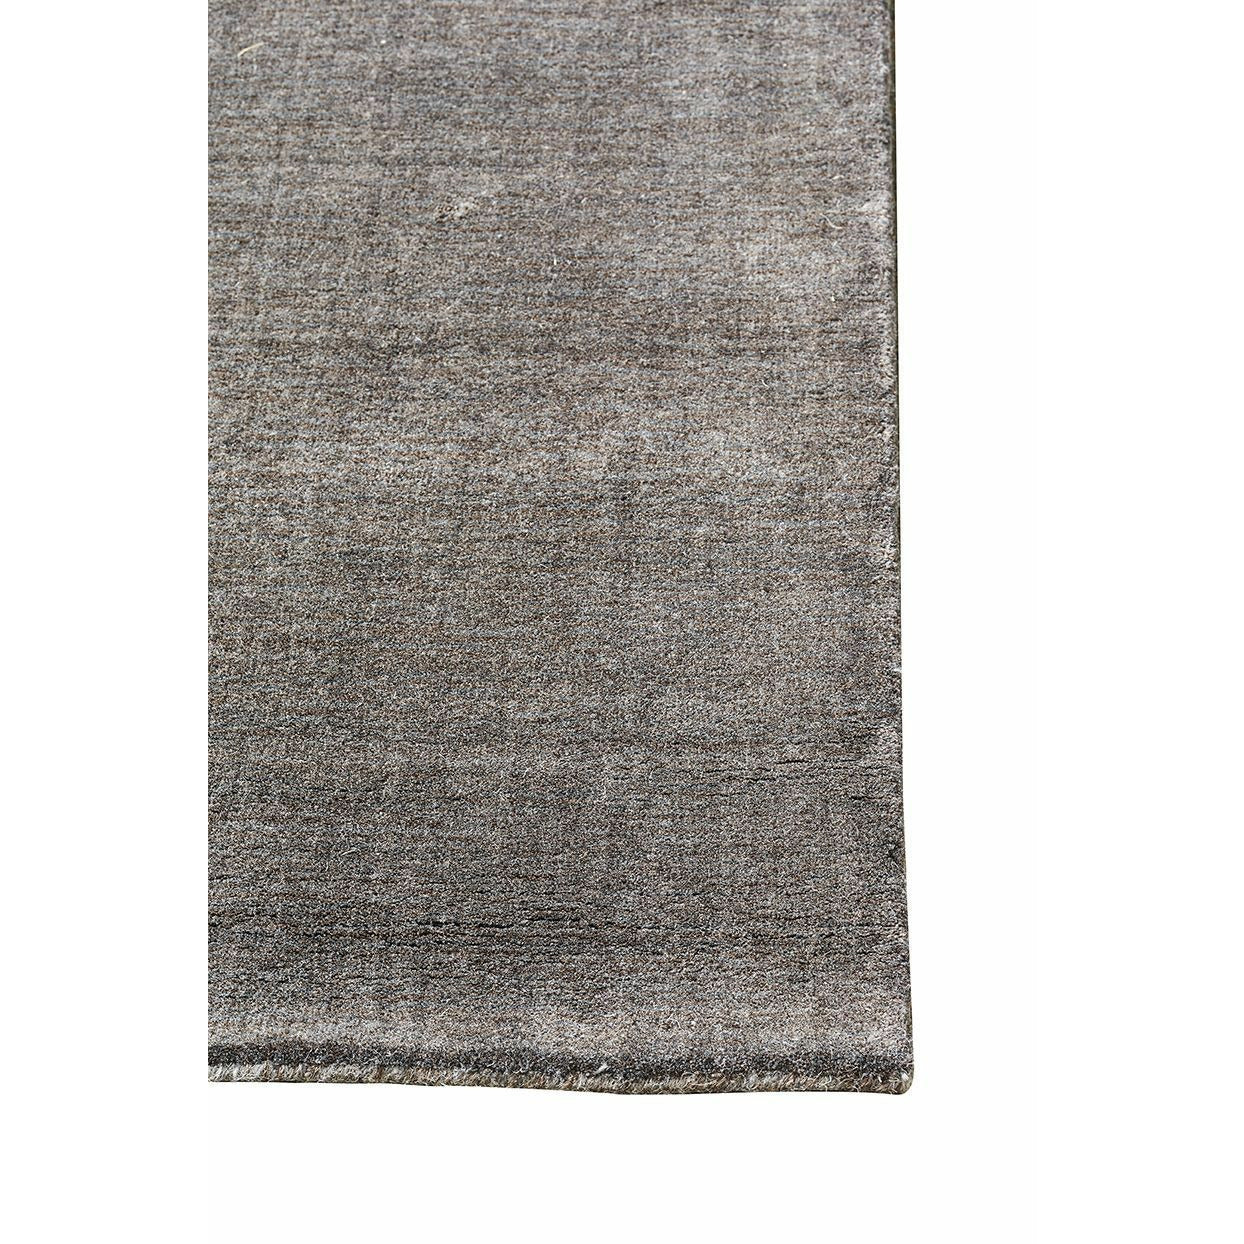 Massimo Jorden bambus tæppe varm grå, 170x240 cm